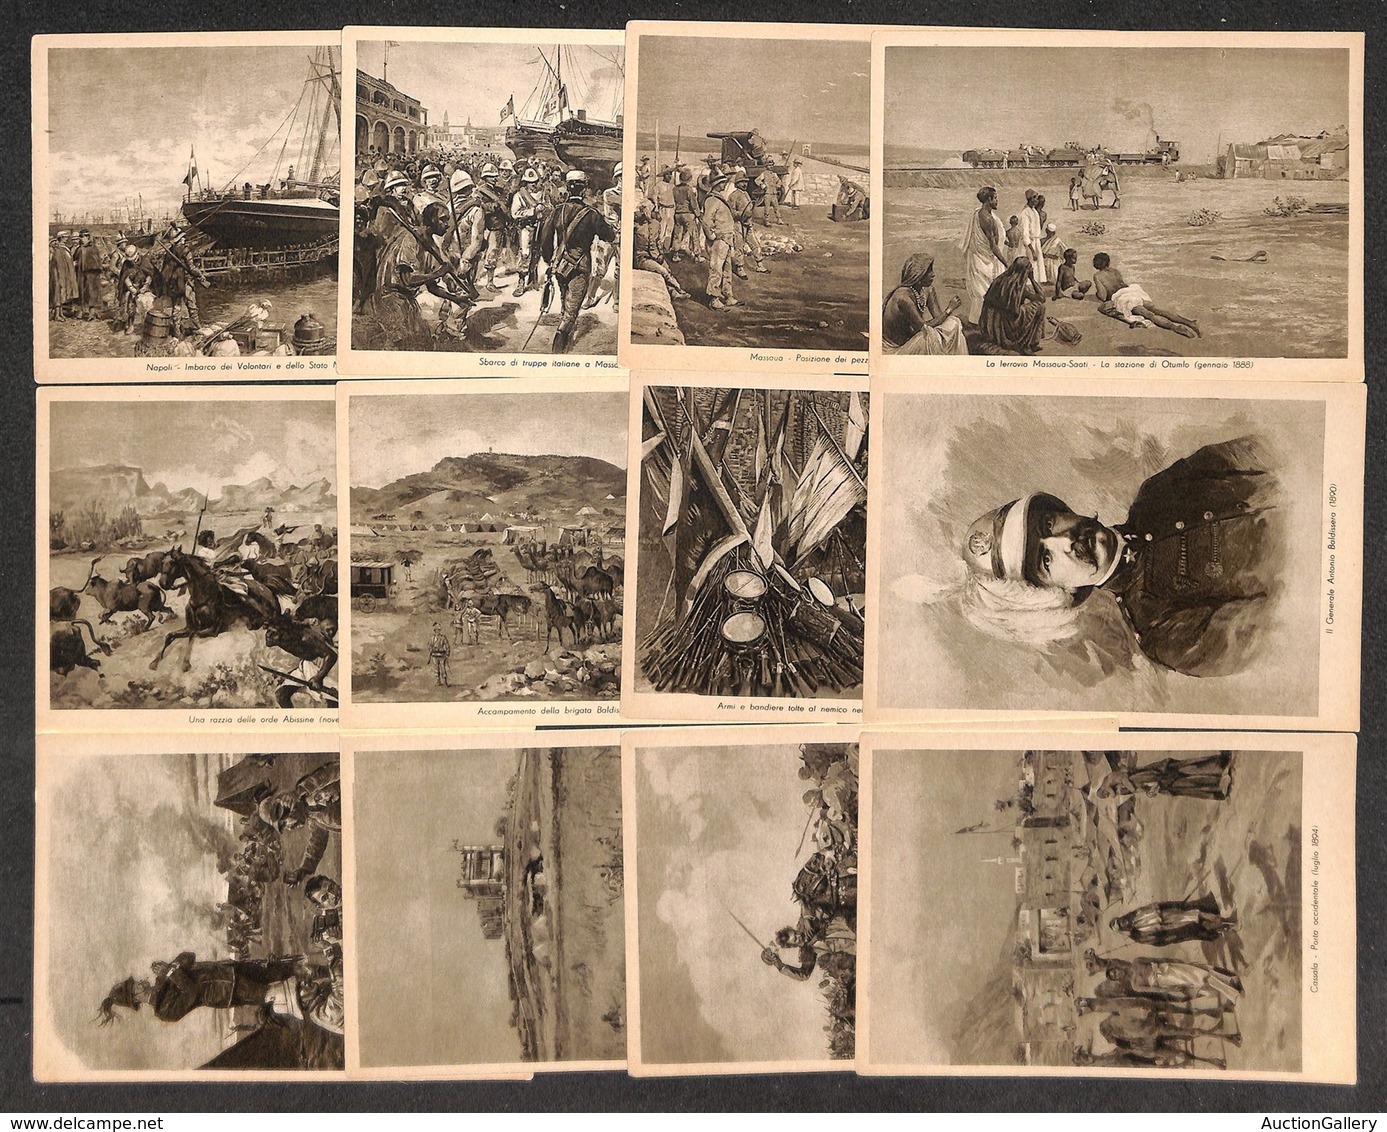 CARTOLINE - MILITARI - 12 Cartoline 1885/1896 Le Campagne D'Africa - Serie Completa In Fascetta Originale - Nuove FG - Non Classés